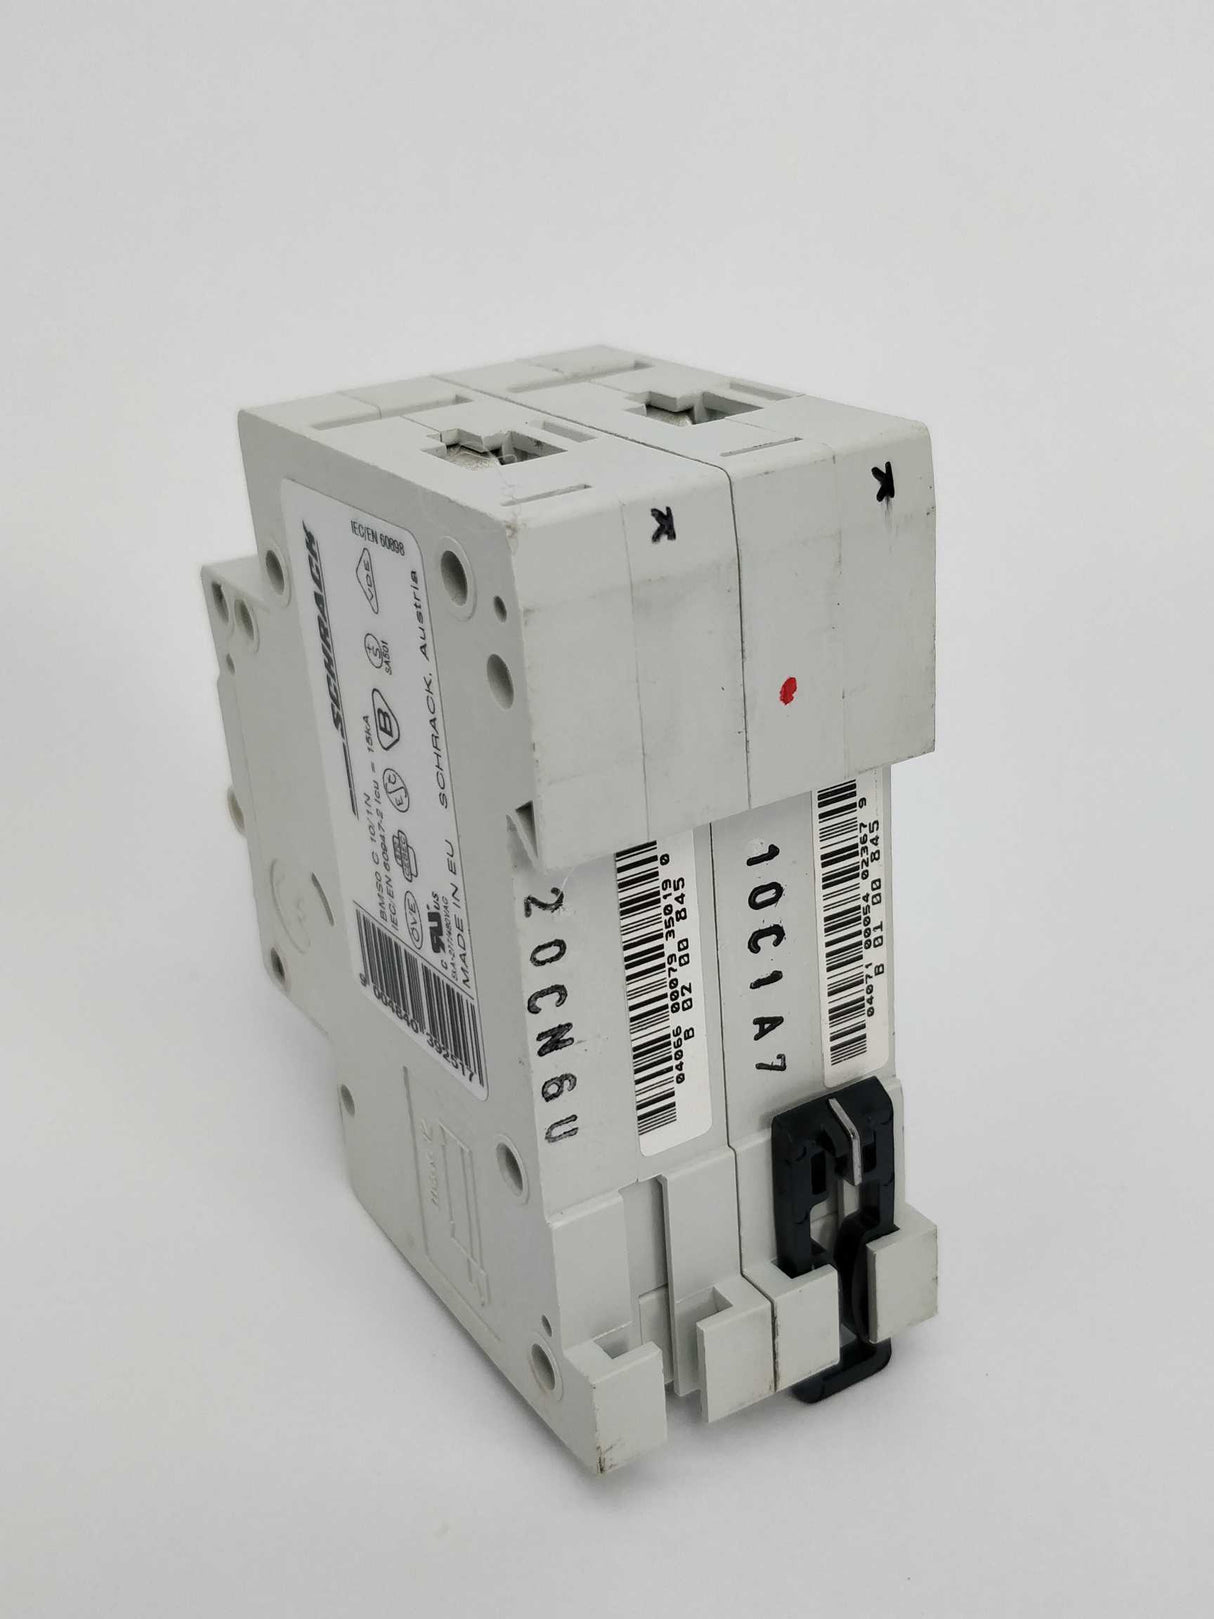 Schrack BMS0 C10/1N Miniature Circuit Breaker